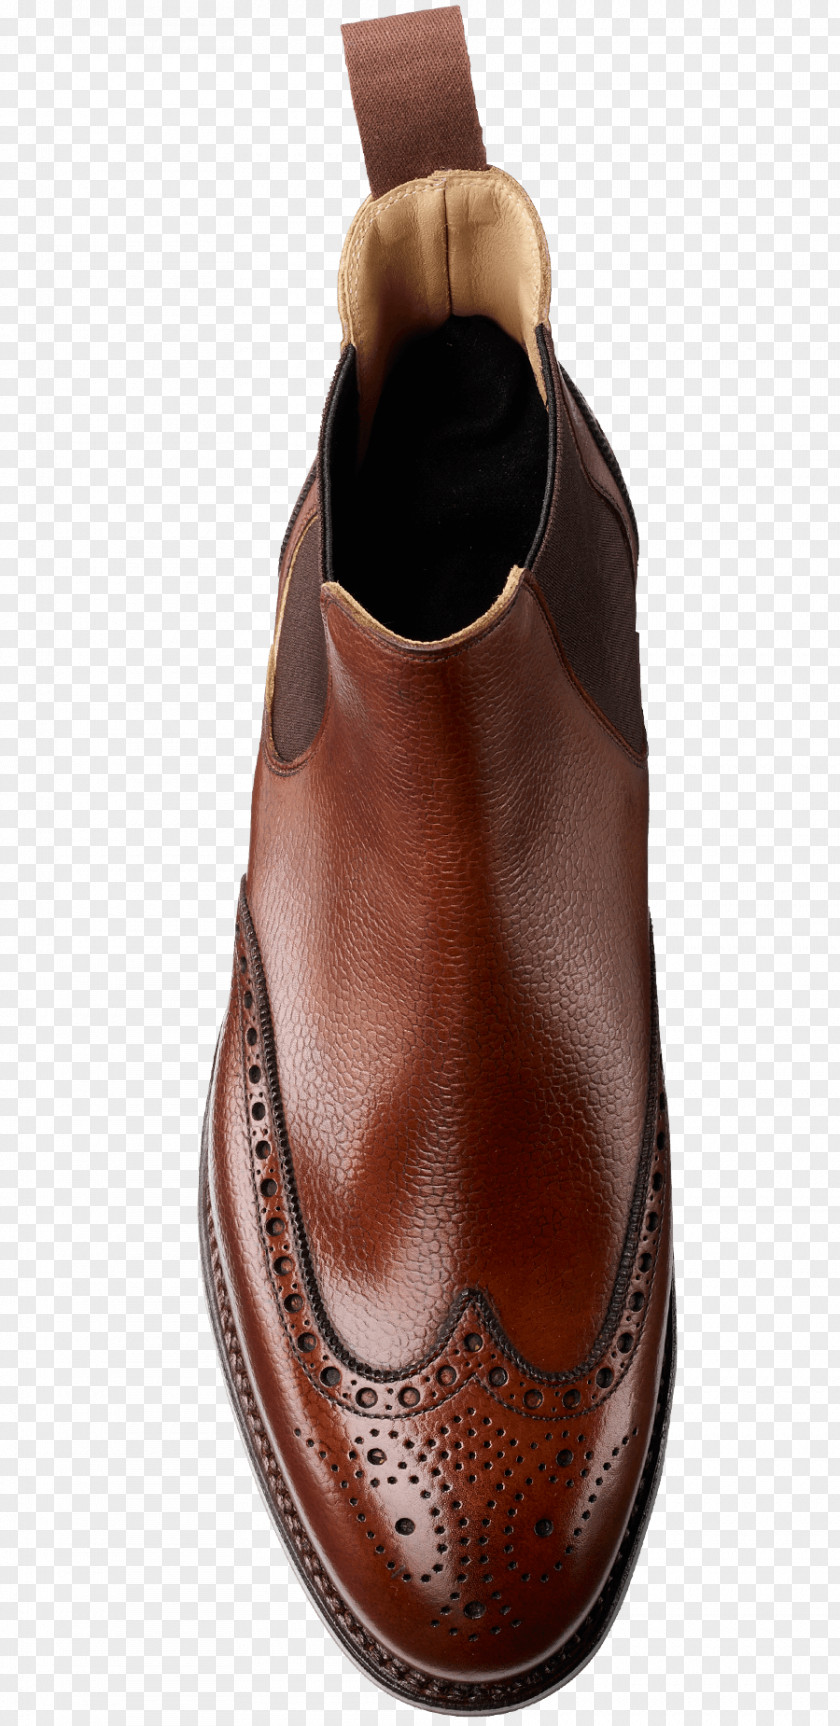 Goodyear Welt Leather Brogue Shoe Crockett & Jones Chelsea Boot PNG